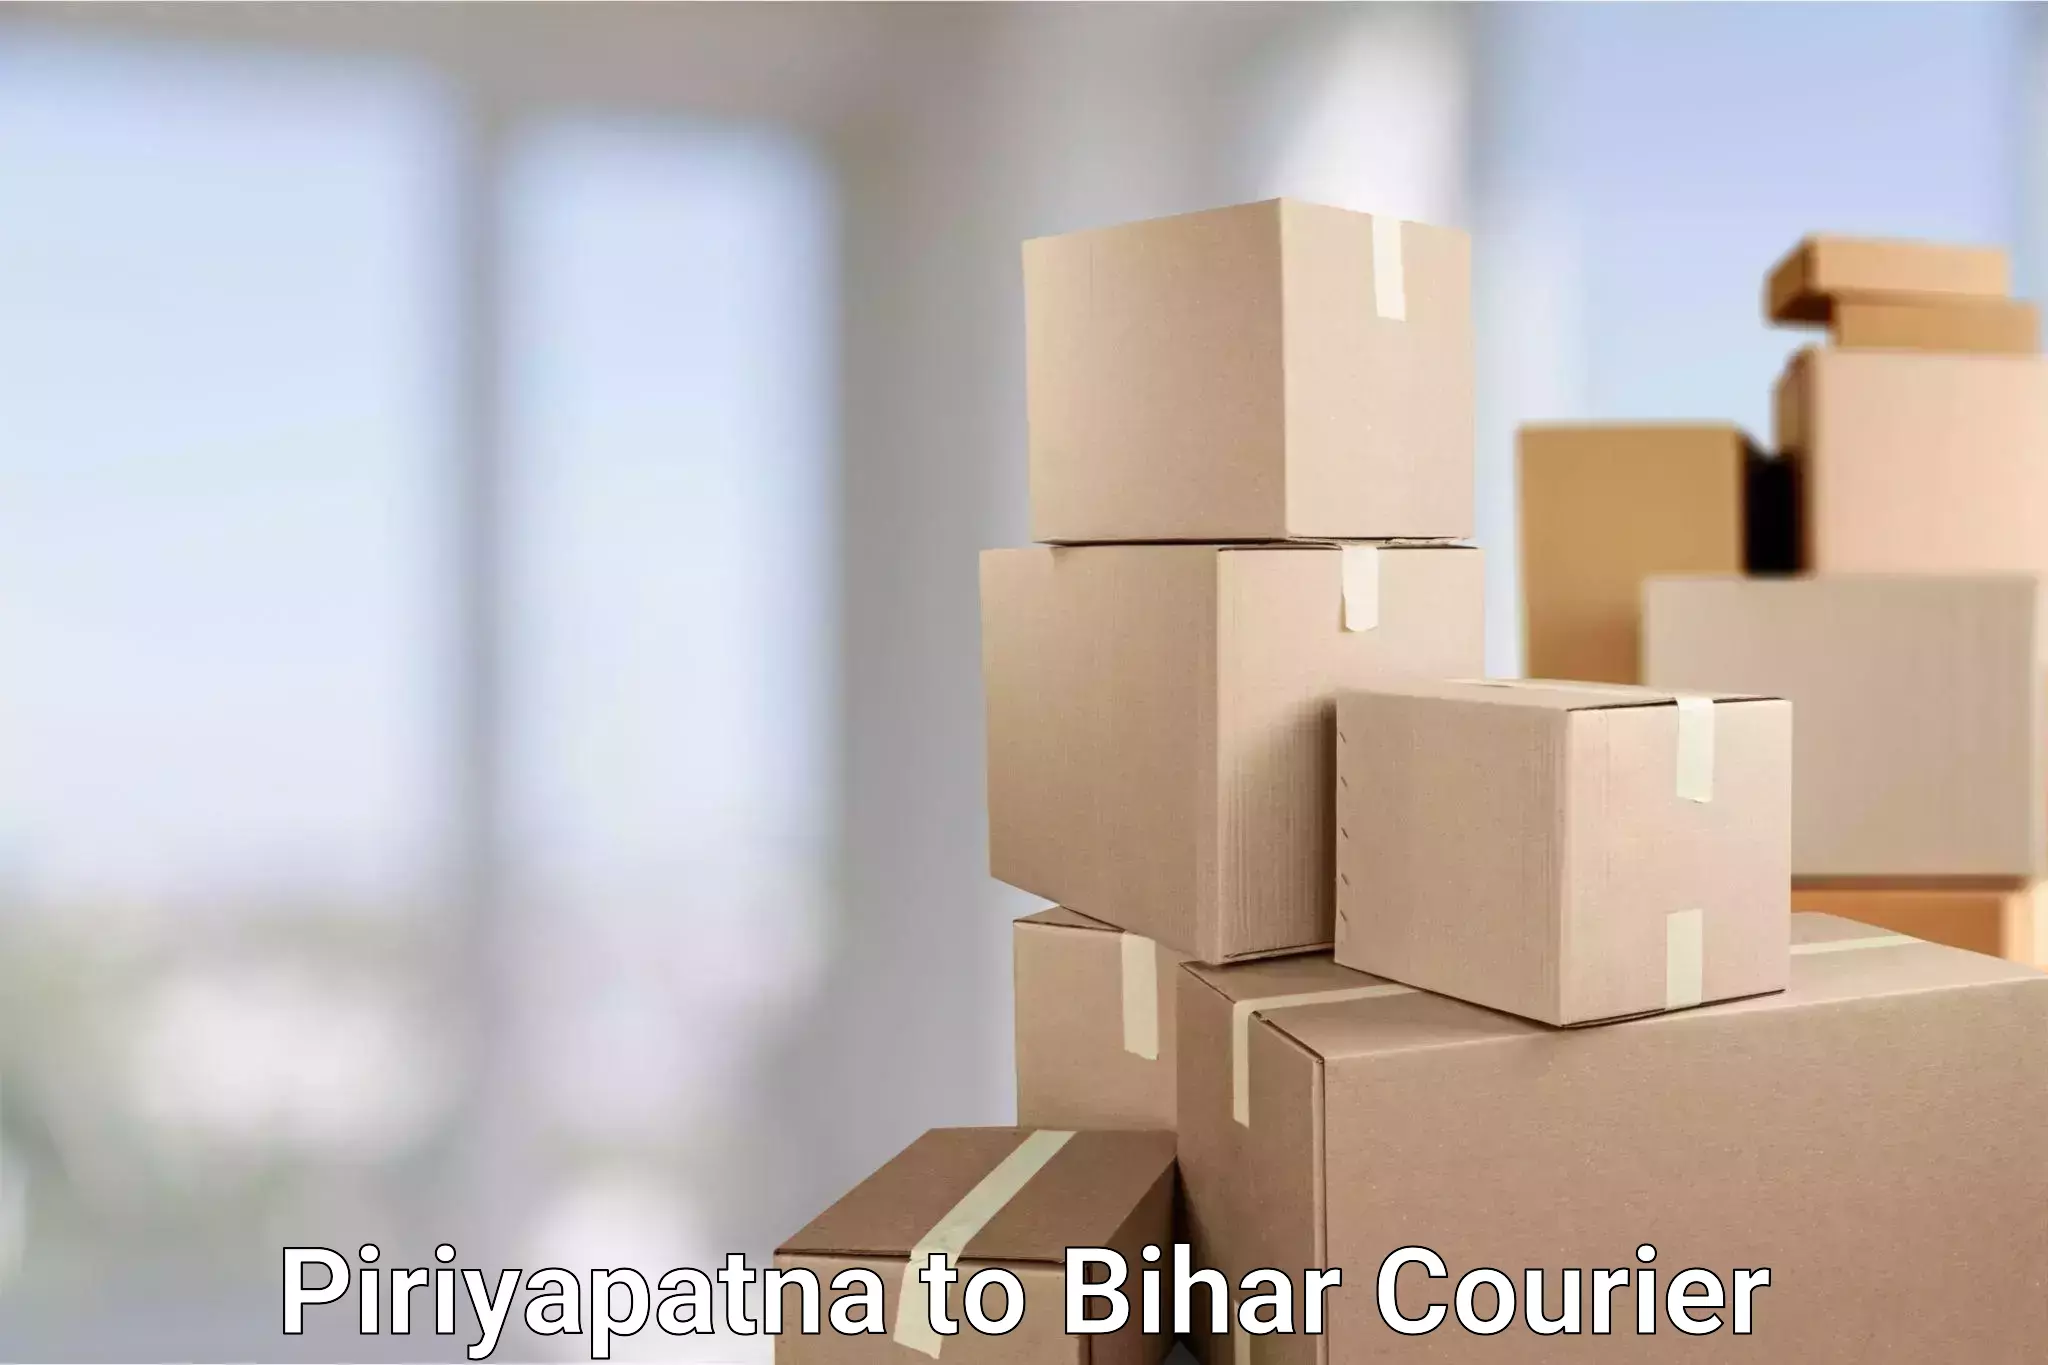 Efficient parcel tracking Piriyapatna to Bihar